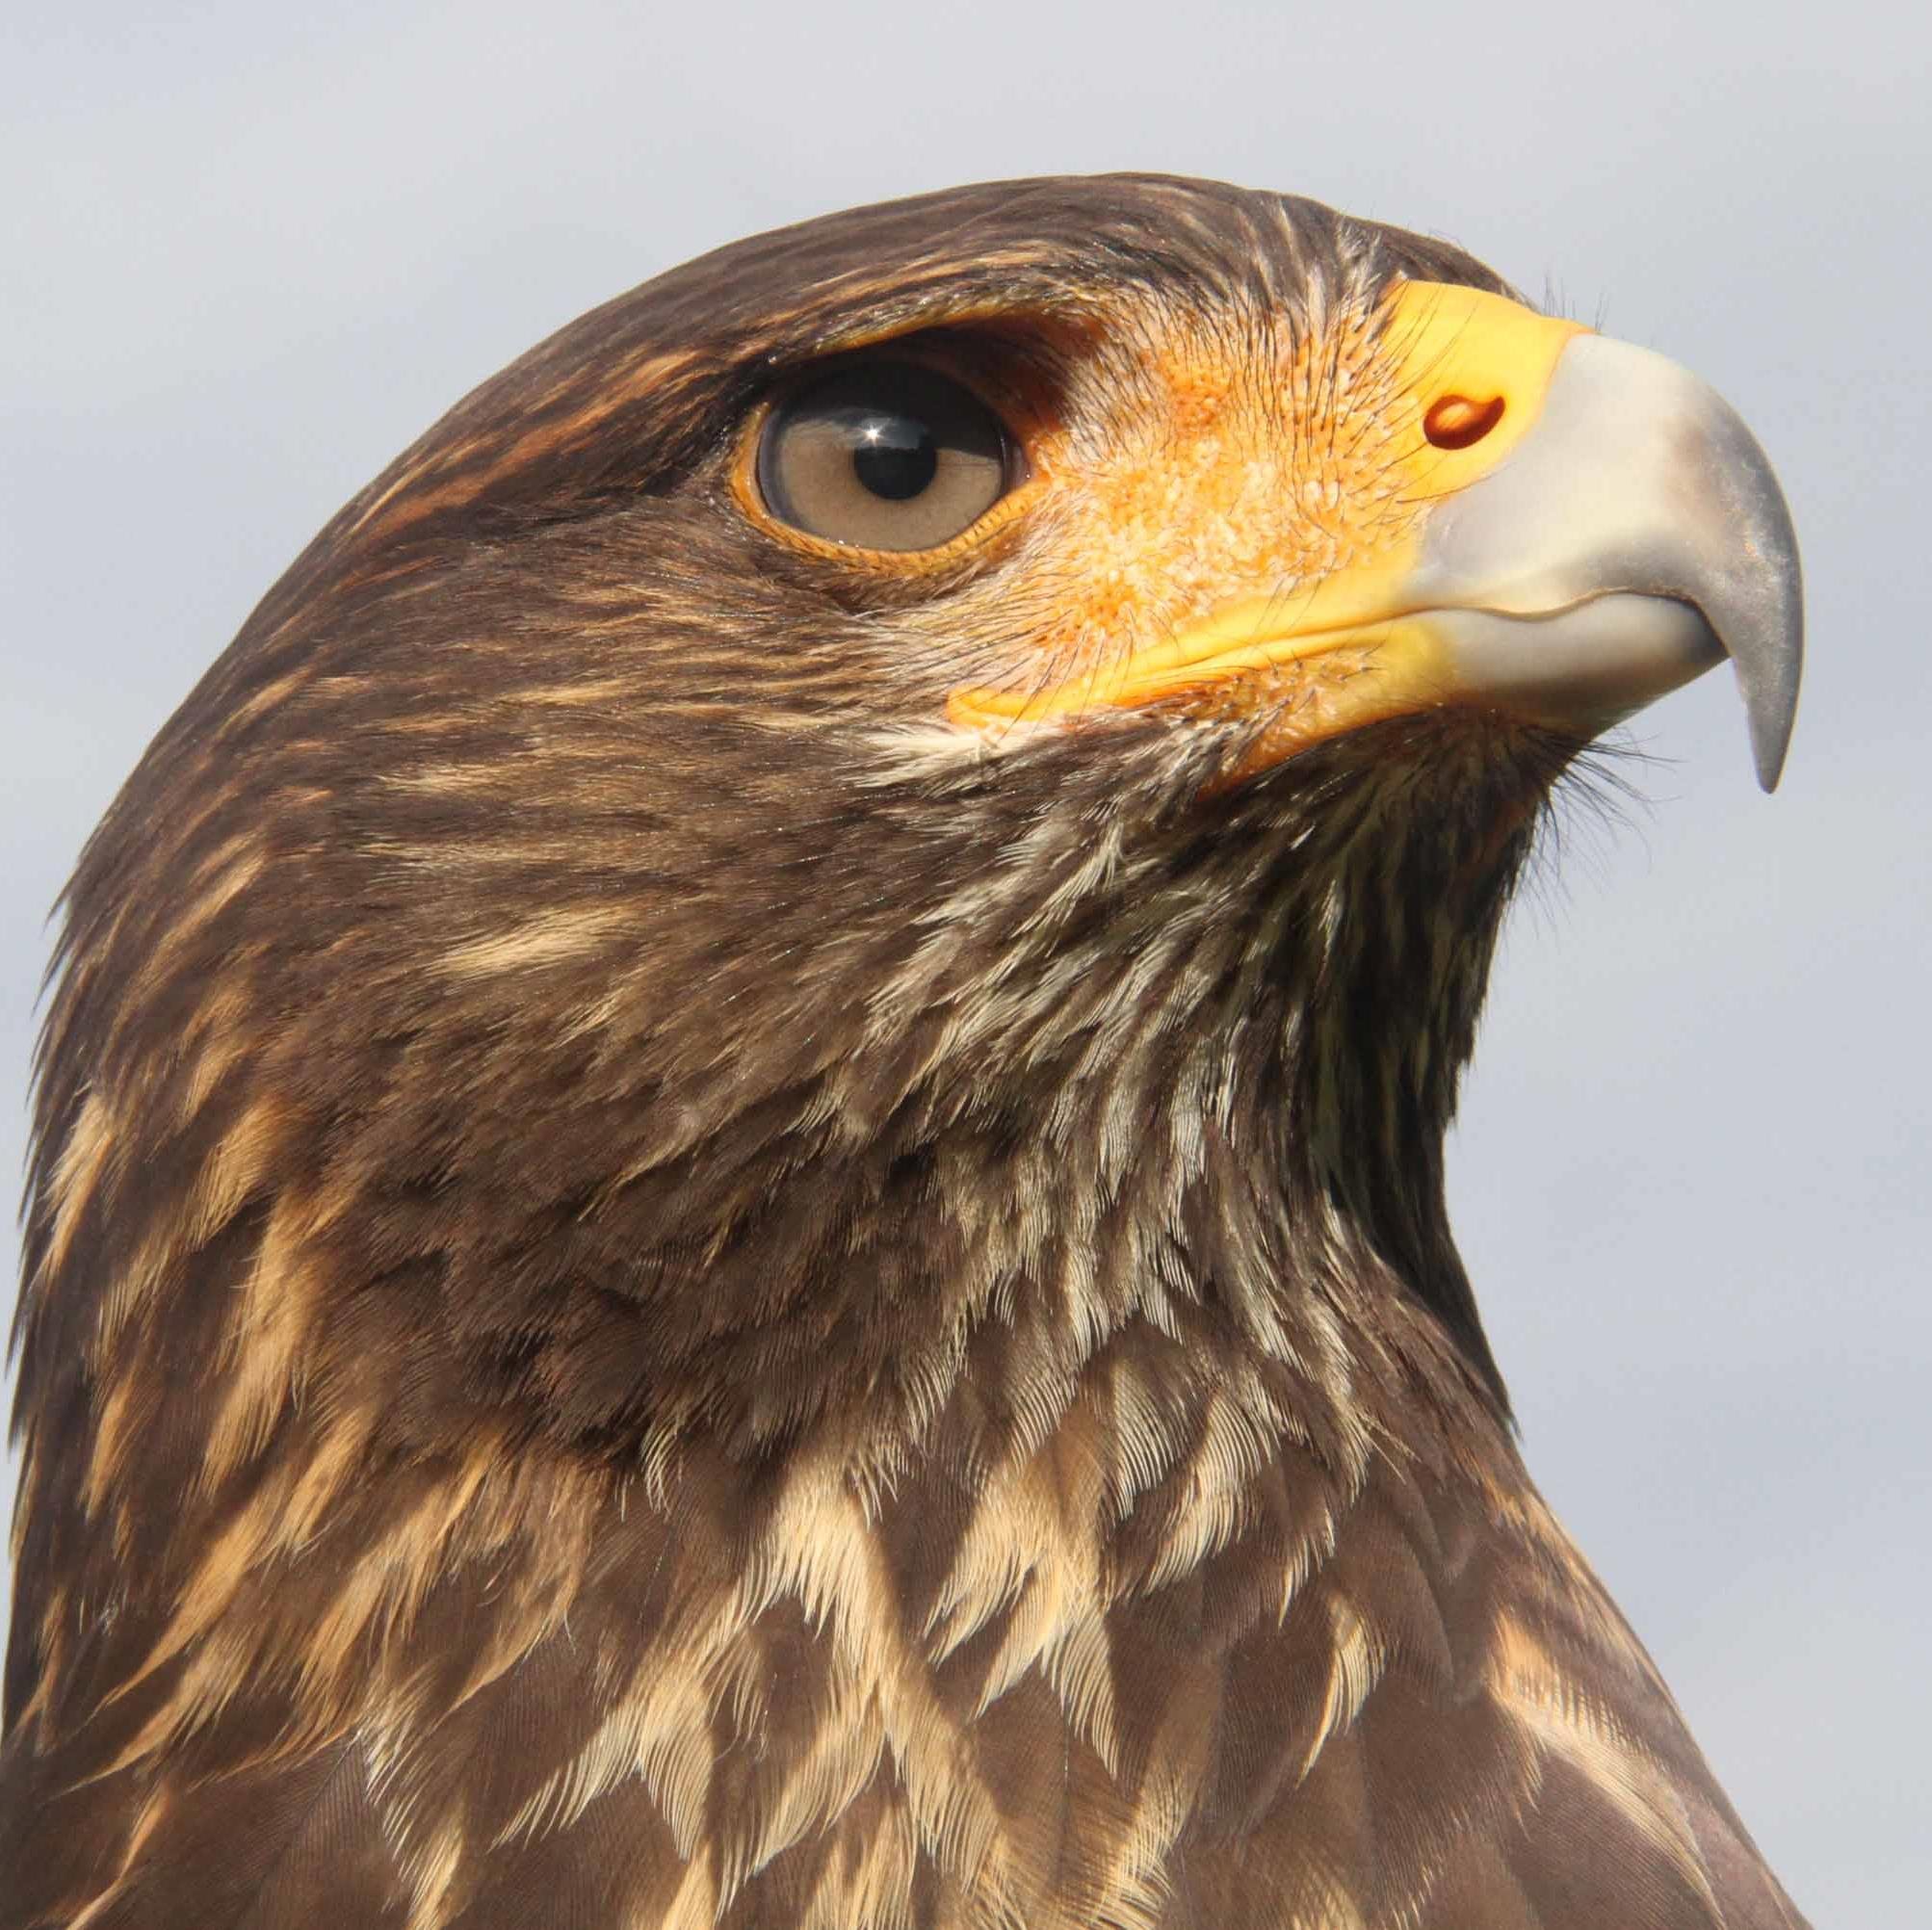 Falconer, raptor breeder, raptor ecologist, co-author The Harris's Hawk Revolution. Hunting with Harris's Hawks #Raptorphile #falconry #raptorresearch